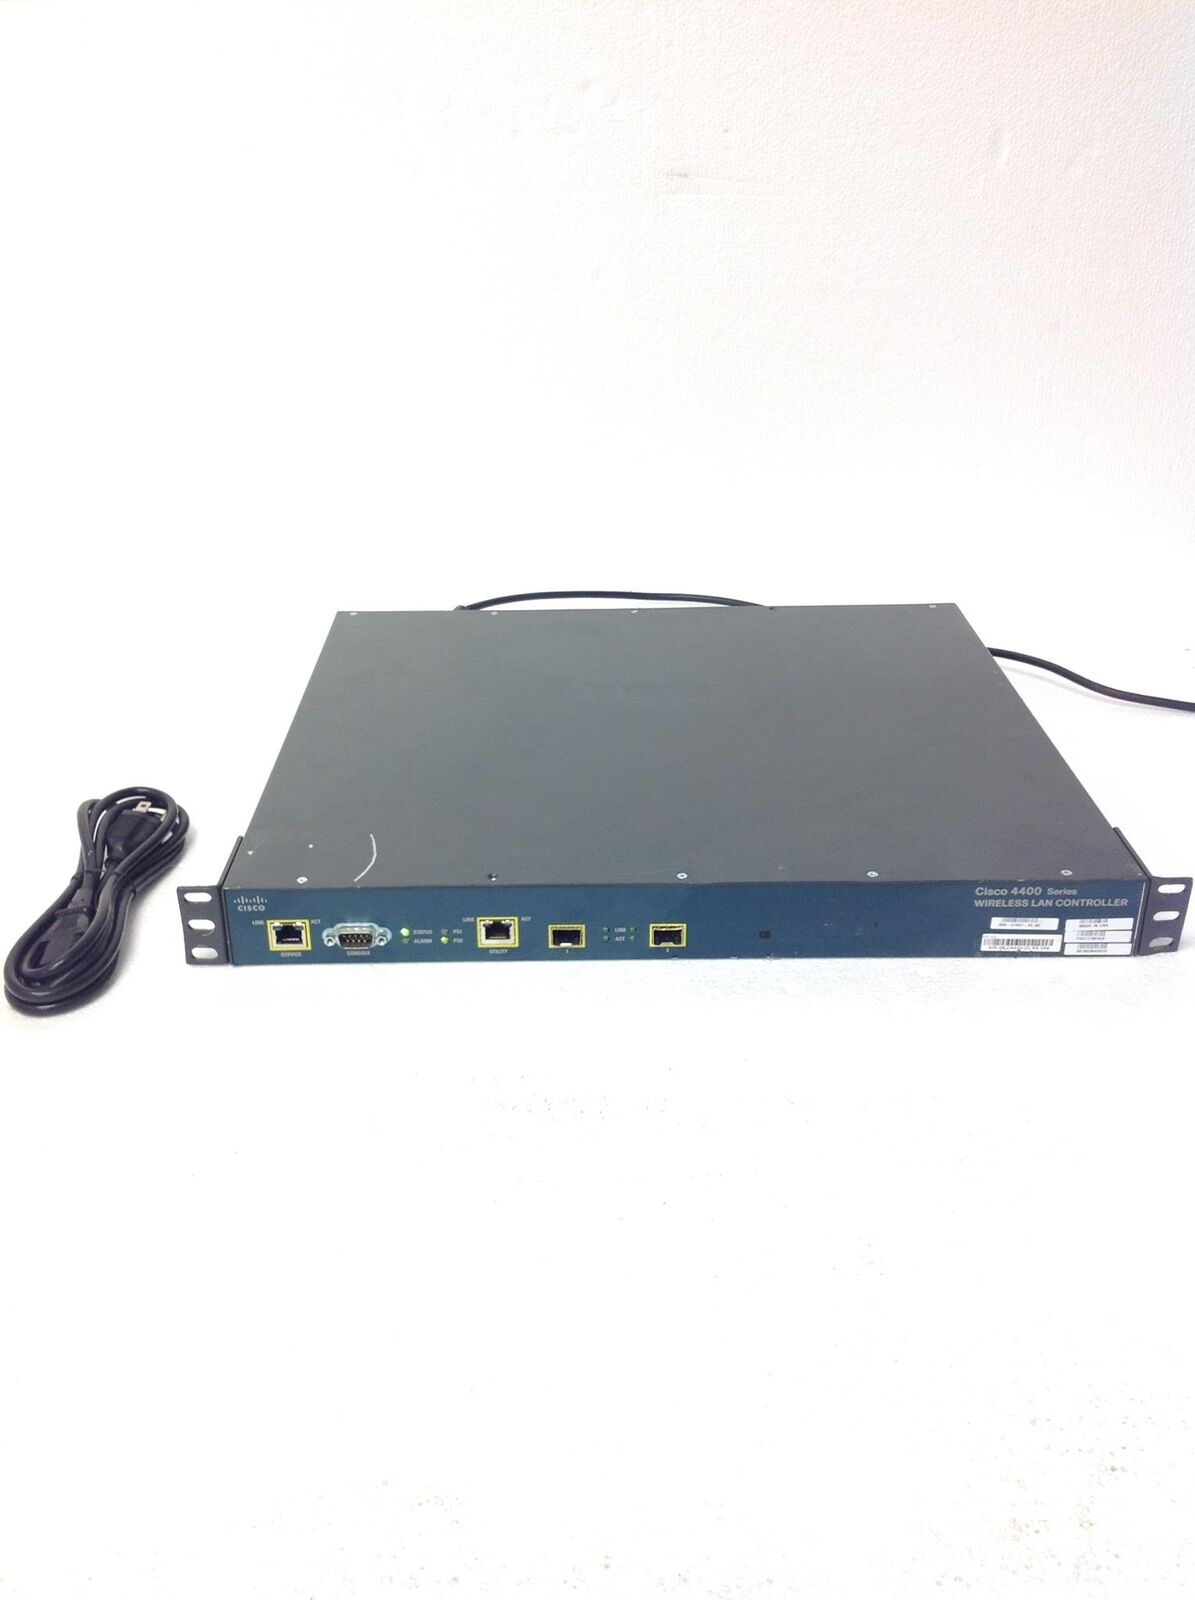 Cisco 4402 25 / AP AIR-WLC4402-25-K9 Rackmount Wireless LAN Controller WORKING